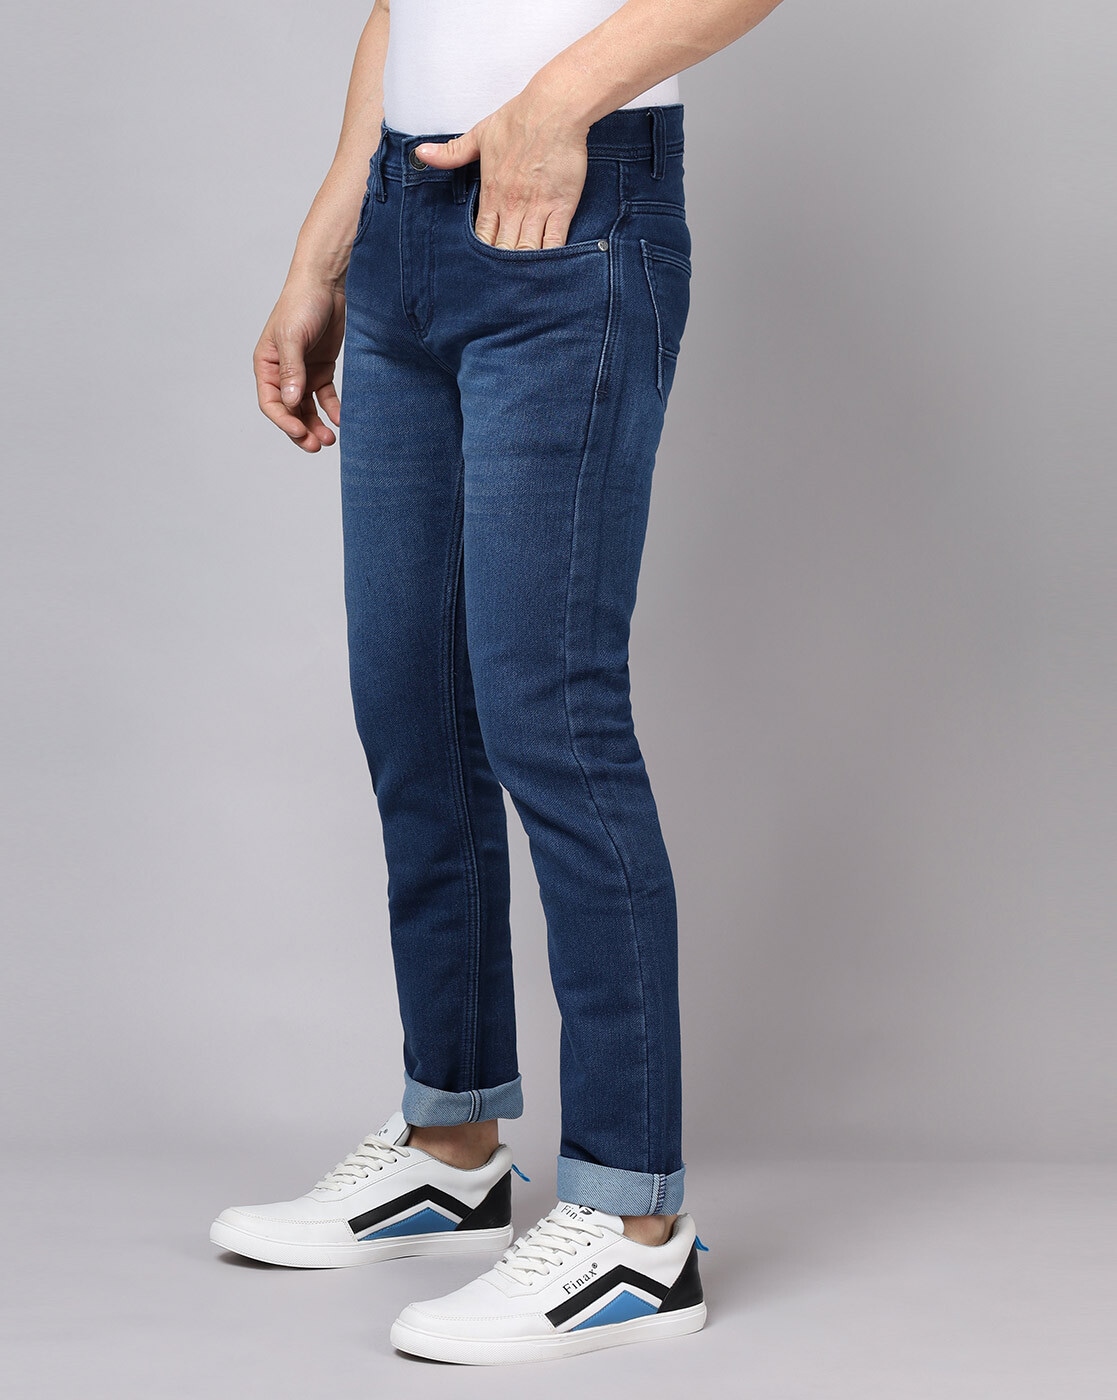 Best Jeans Under ₹700 By Myntra | Best jeans, Jeans brands, Myntra